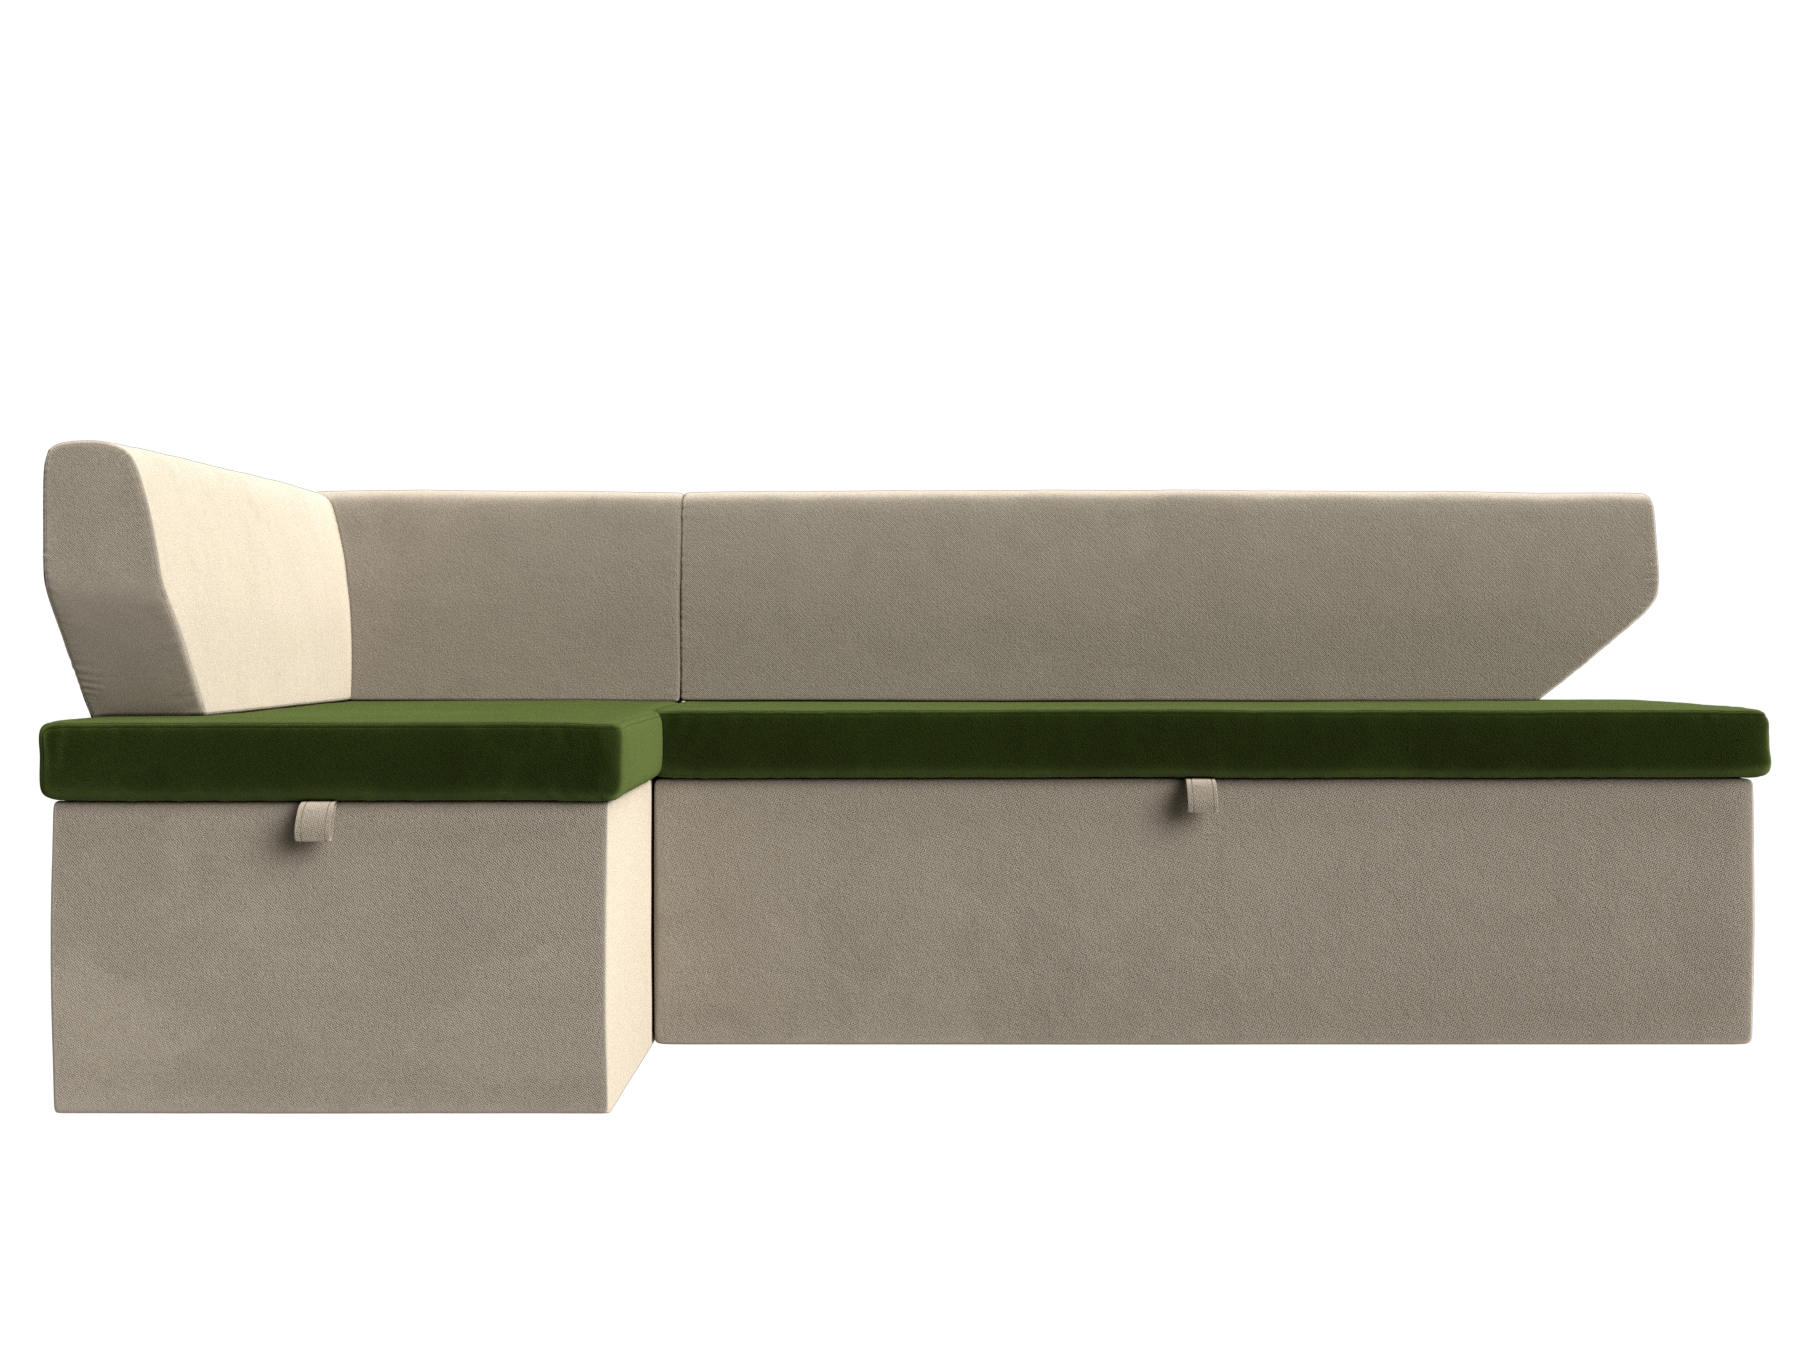 Кухонный угловой диван Омура Левый Зеленый, Бежевый, ЛДСП кухонный угловой диван лига диванов омура микровельвет зеленый бежевый левый угол 113218l